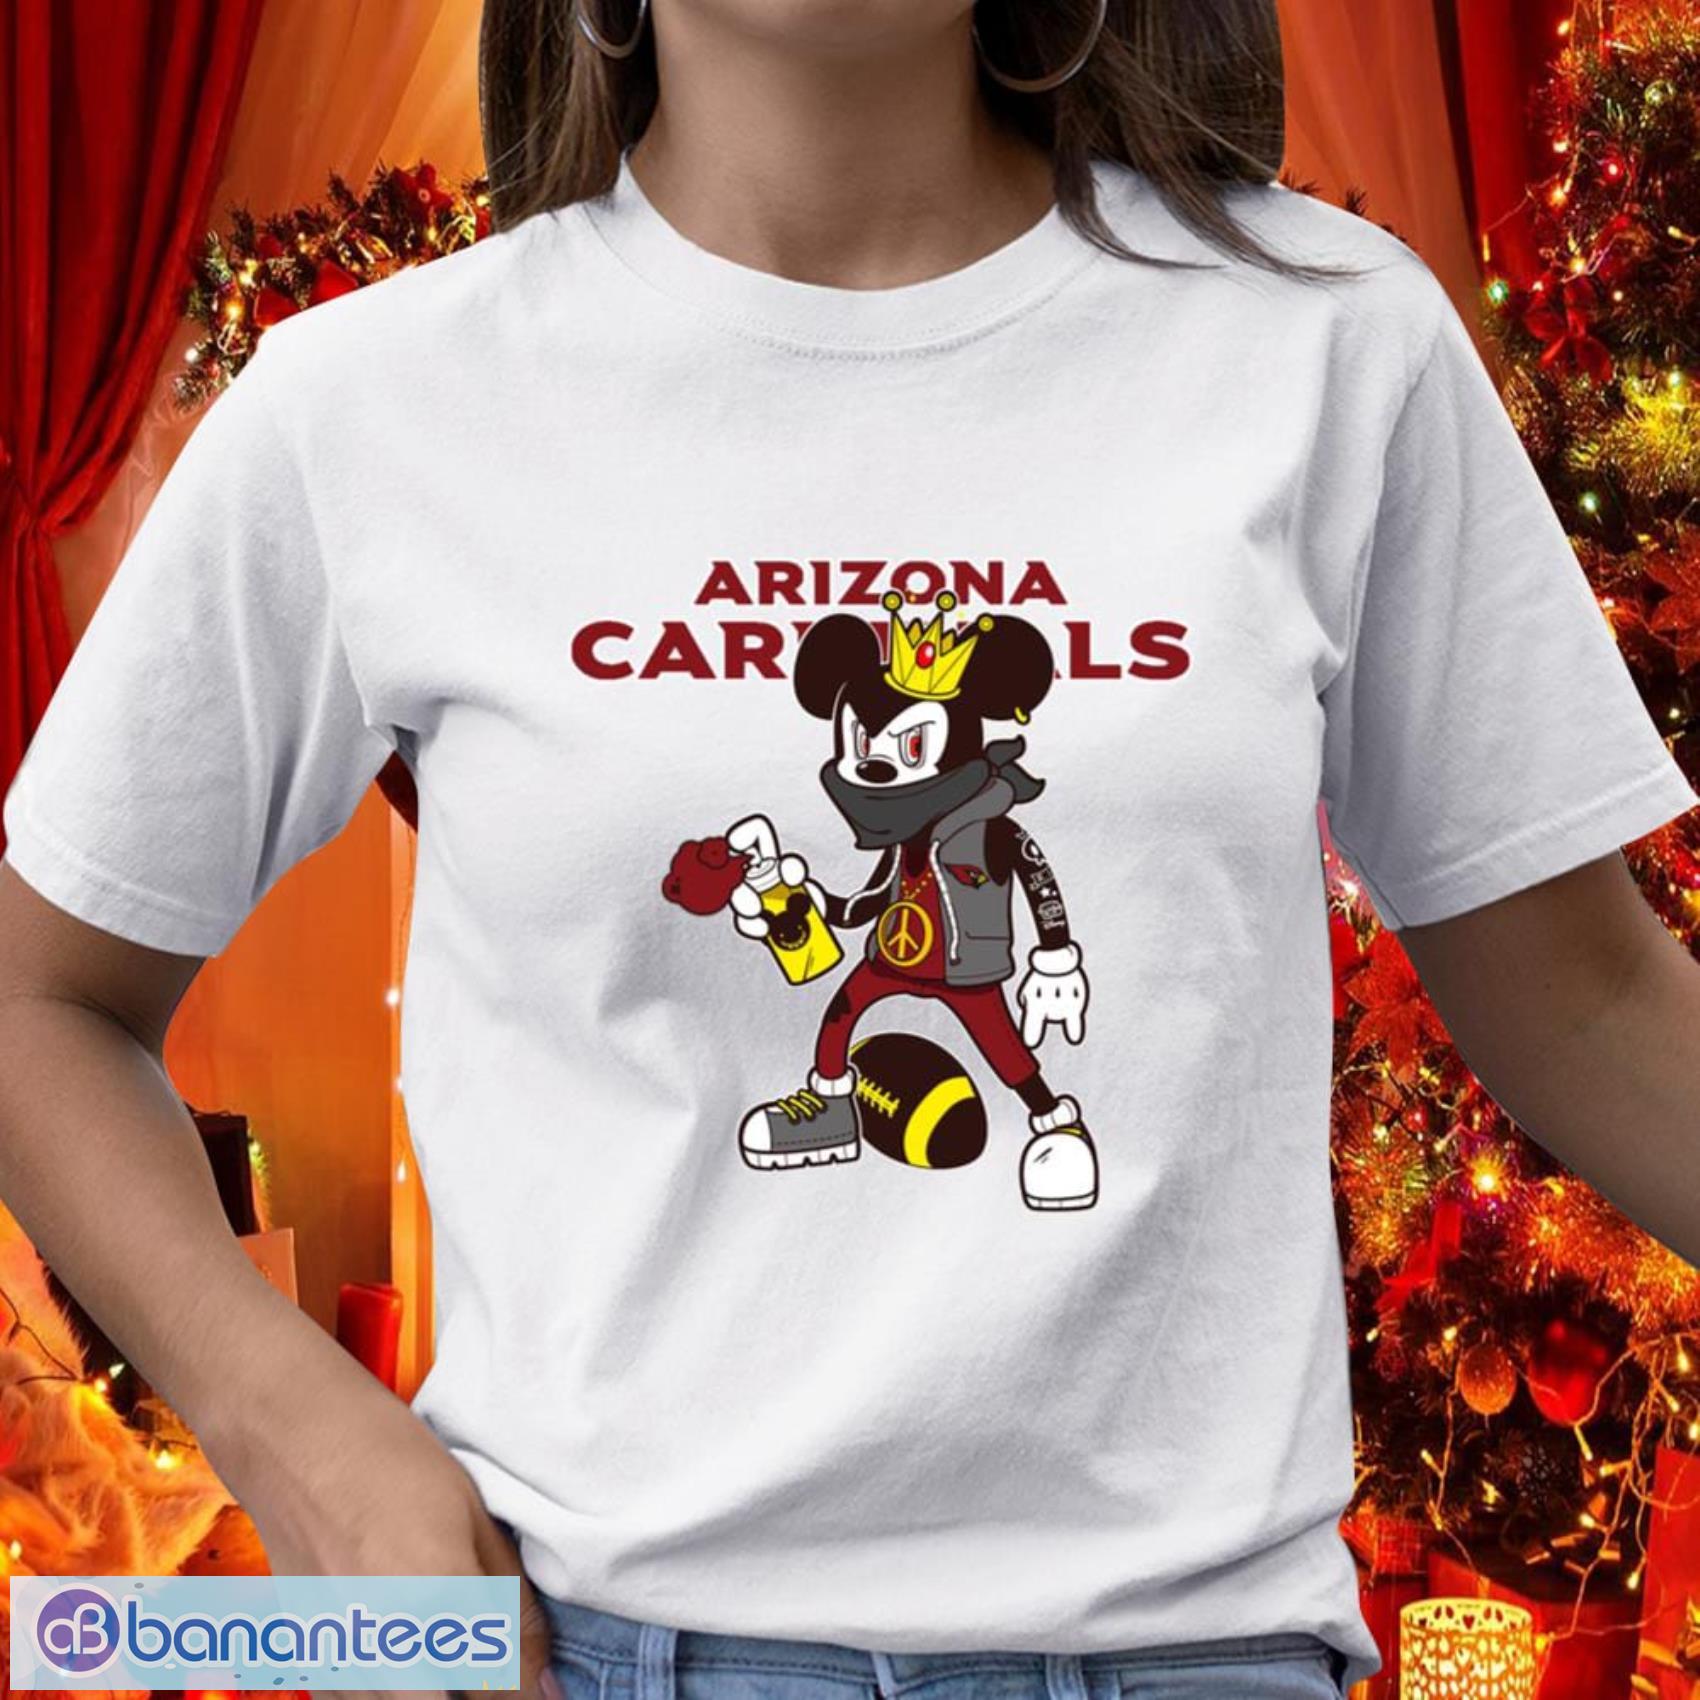 Arizona Cardinals NFL Football Gift Fr Fans Mickey Peace Sign Sports T Shirt - Arizona Cardinals NFL Football Mickey Peace Sign Sports T Shirt_1